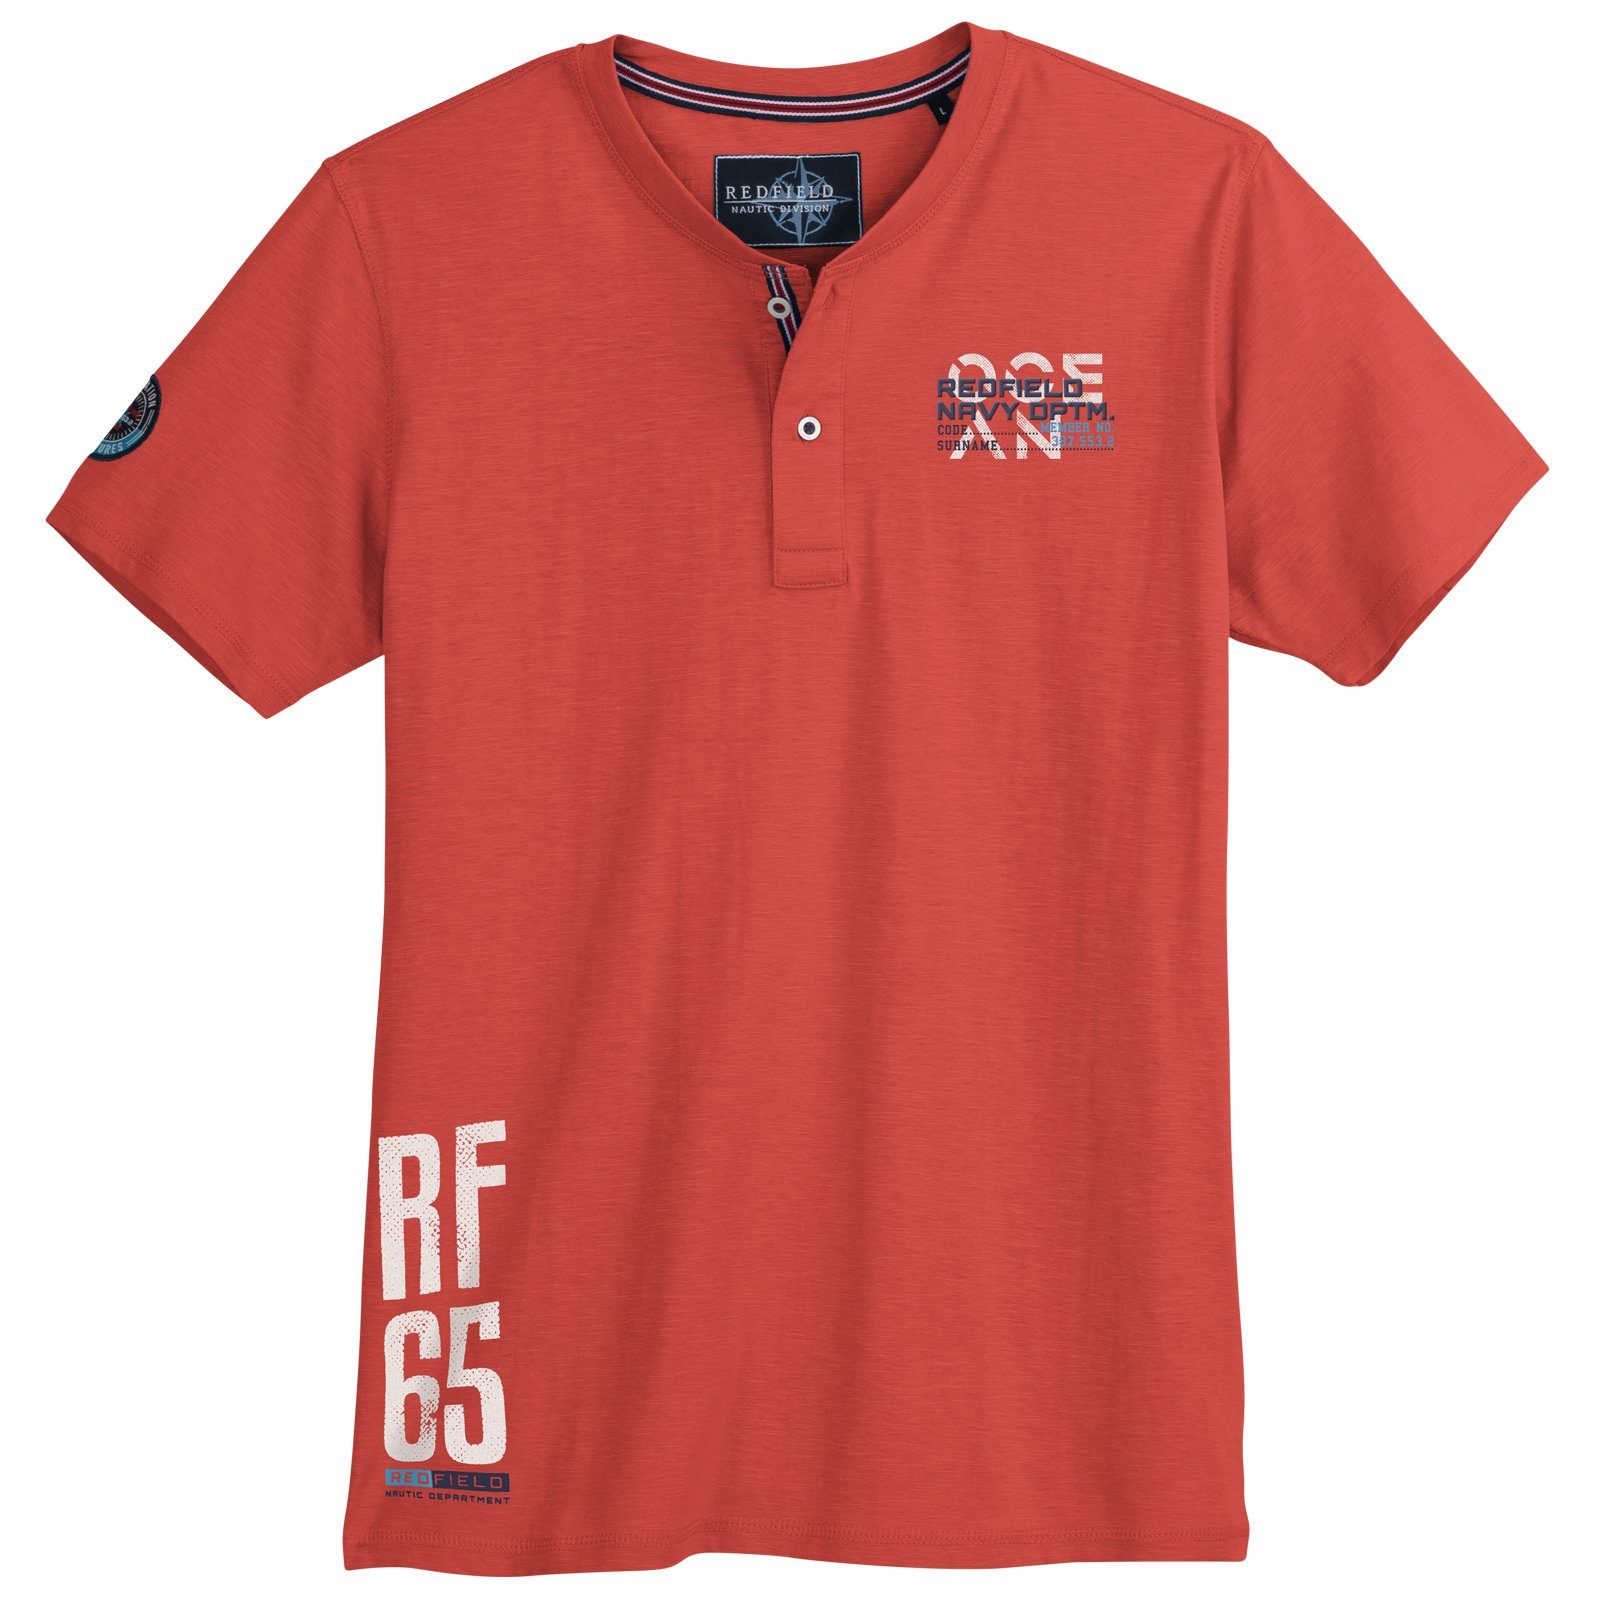 redfield Print-Shirt Große Größen Herren Serafino T-Shirt maritim paprikarot Redfield